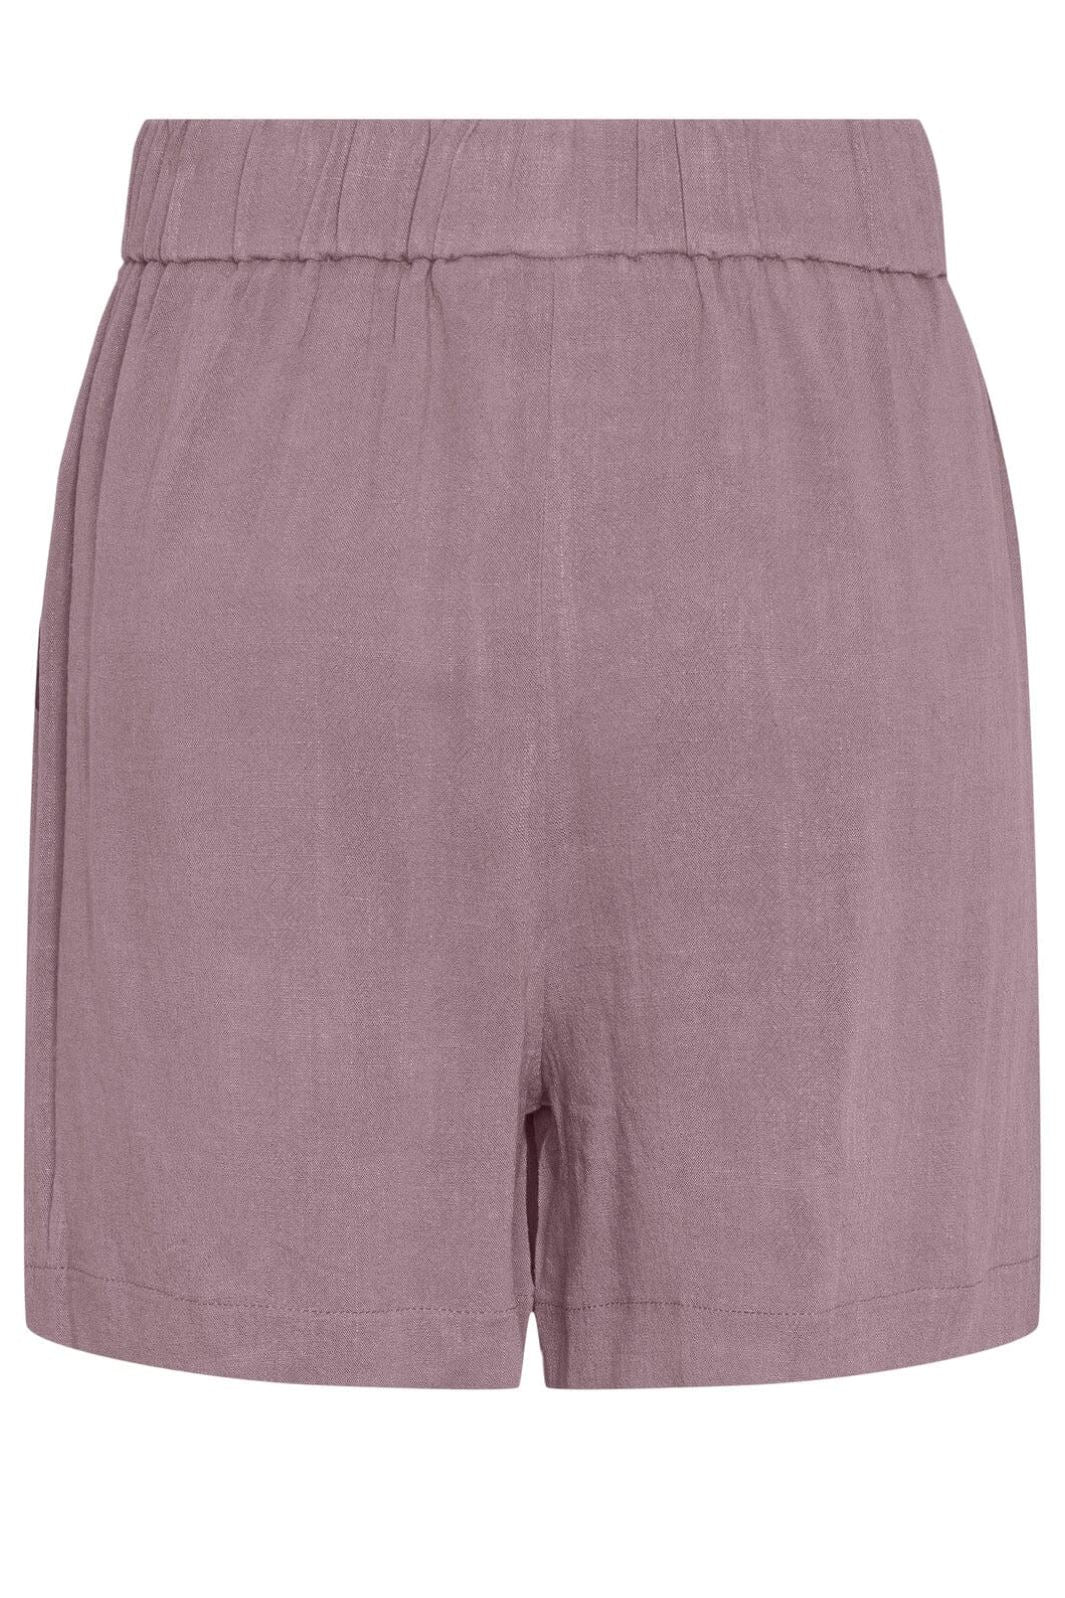 Pieces - Pcvinsty Linen Shorts - 4474944 Woodrose Shorts 